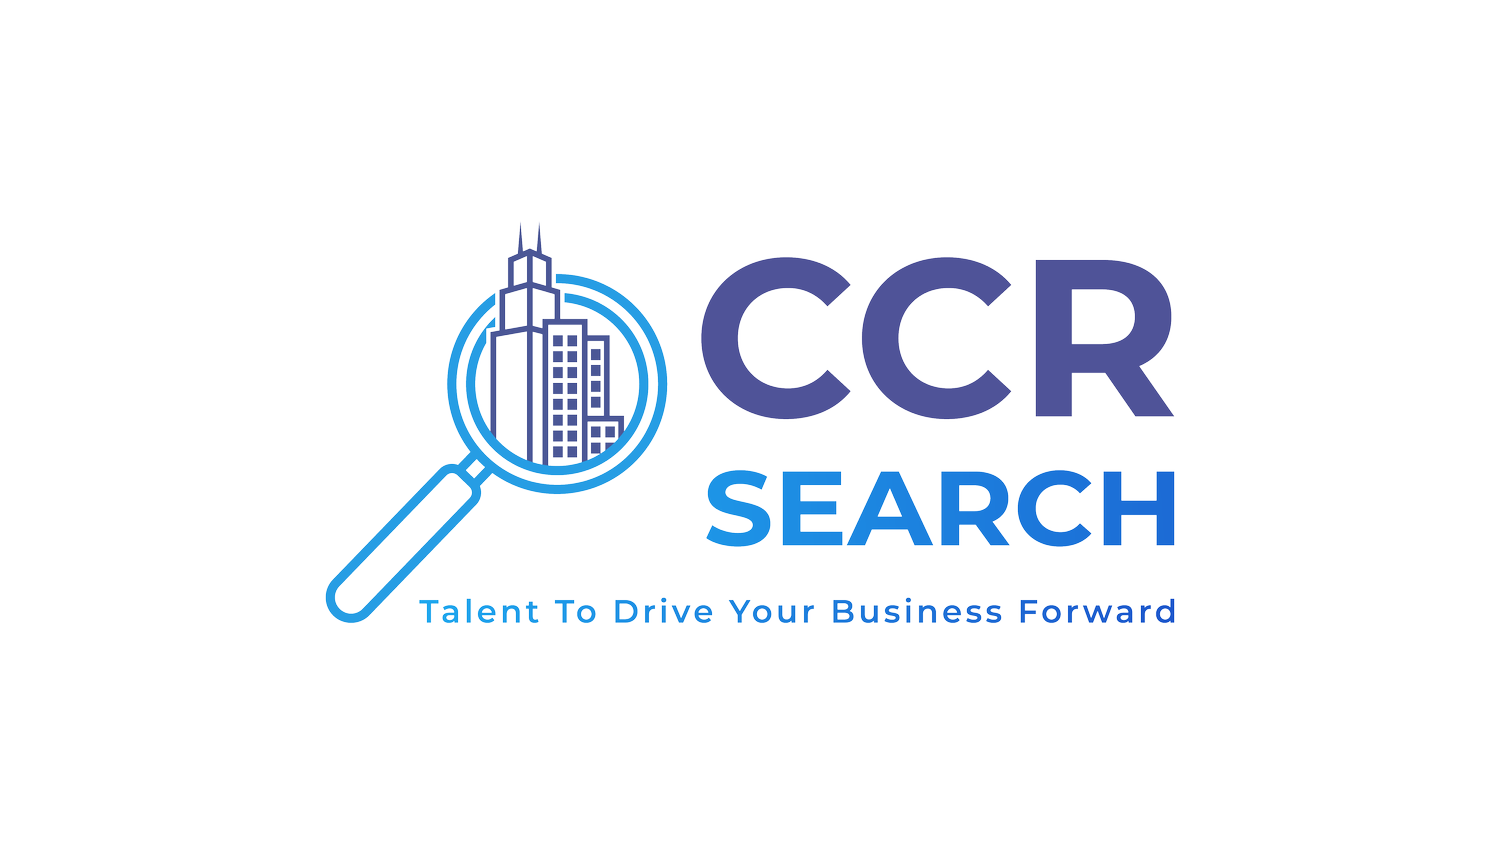 CCR Search